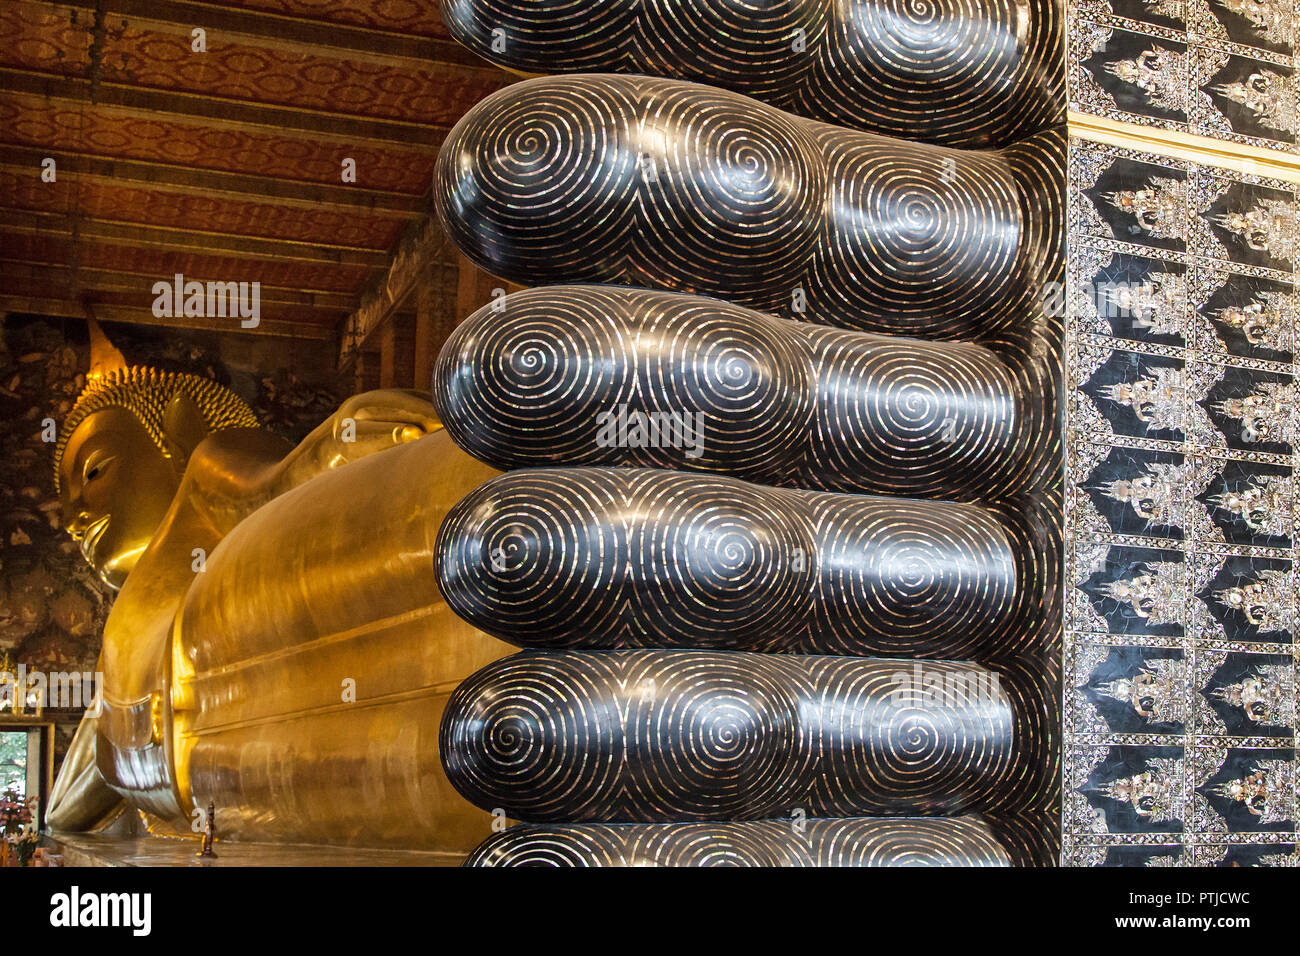 Buda reclinado de pies a cabeza, Wat Pho, en Bangkok, Tailandia. Foto de stock